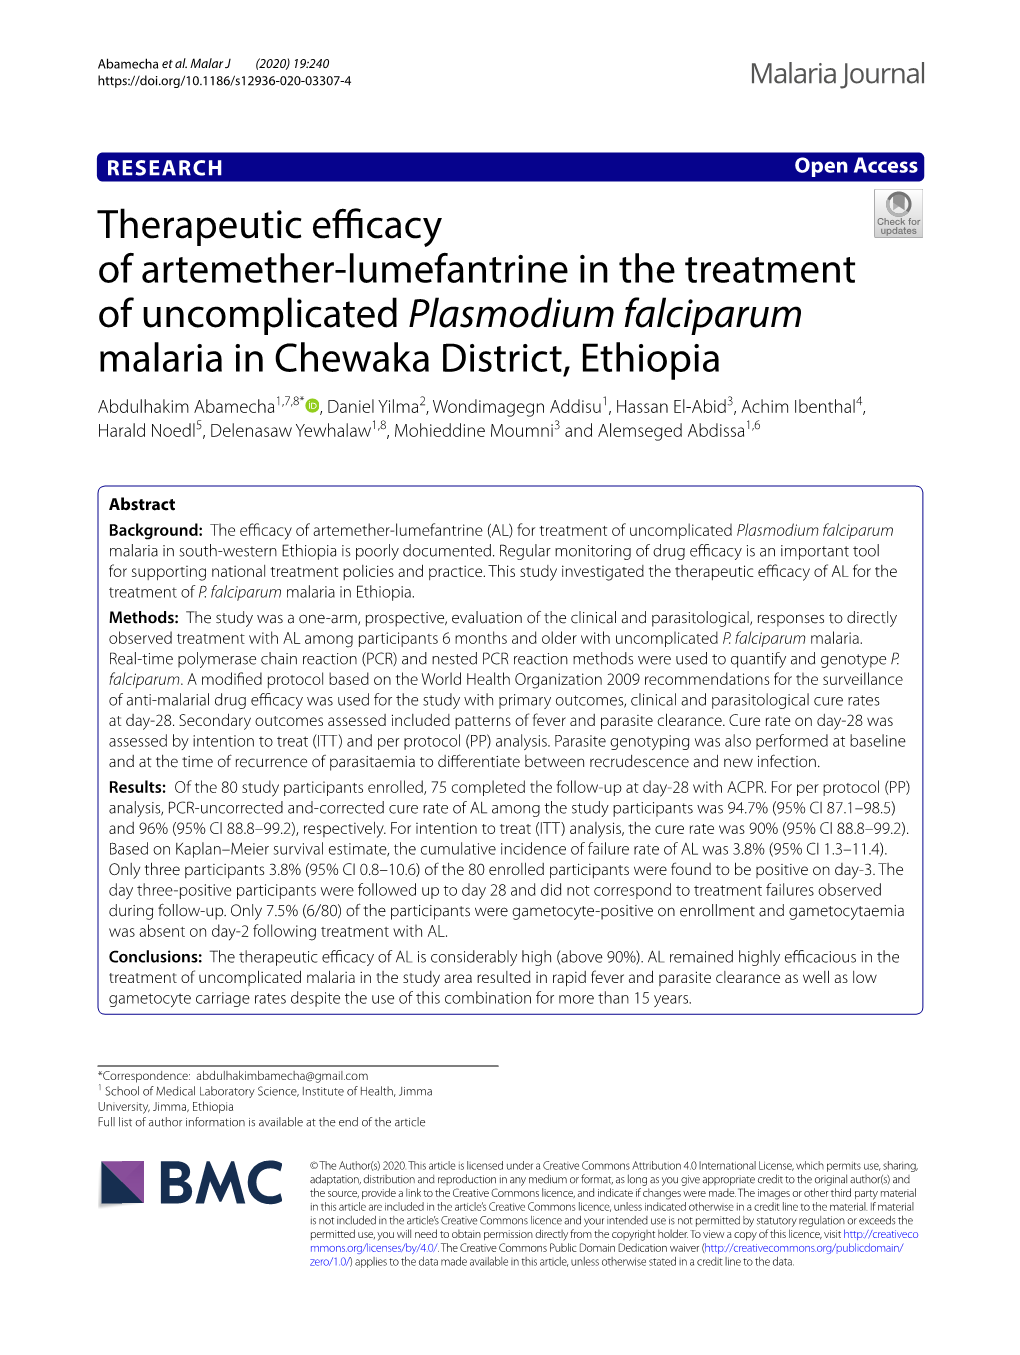 Therapeutic Efficacy of Artemether-Lumefantrine in the Treatment of Uncomplicated Plasmodium Falciparum Malaria in Chewaka Distr